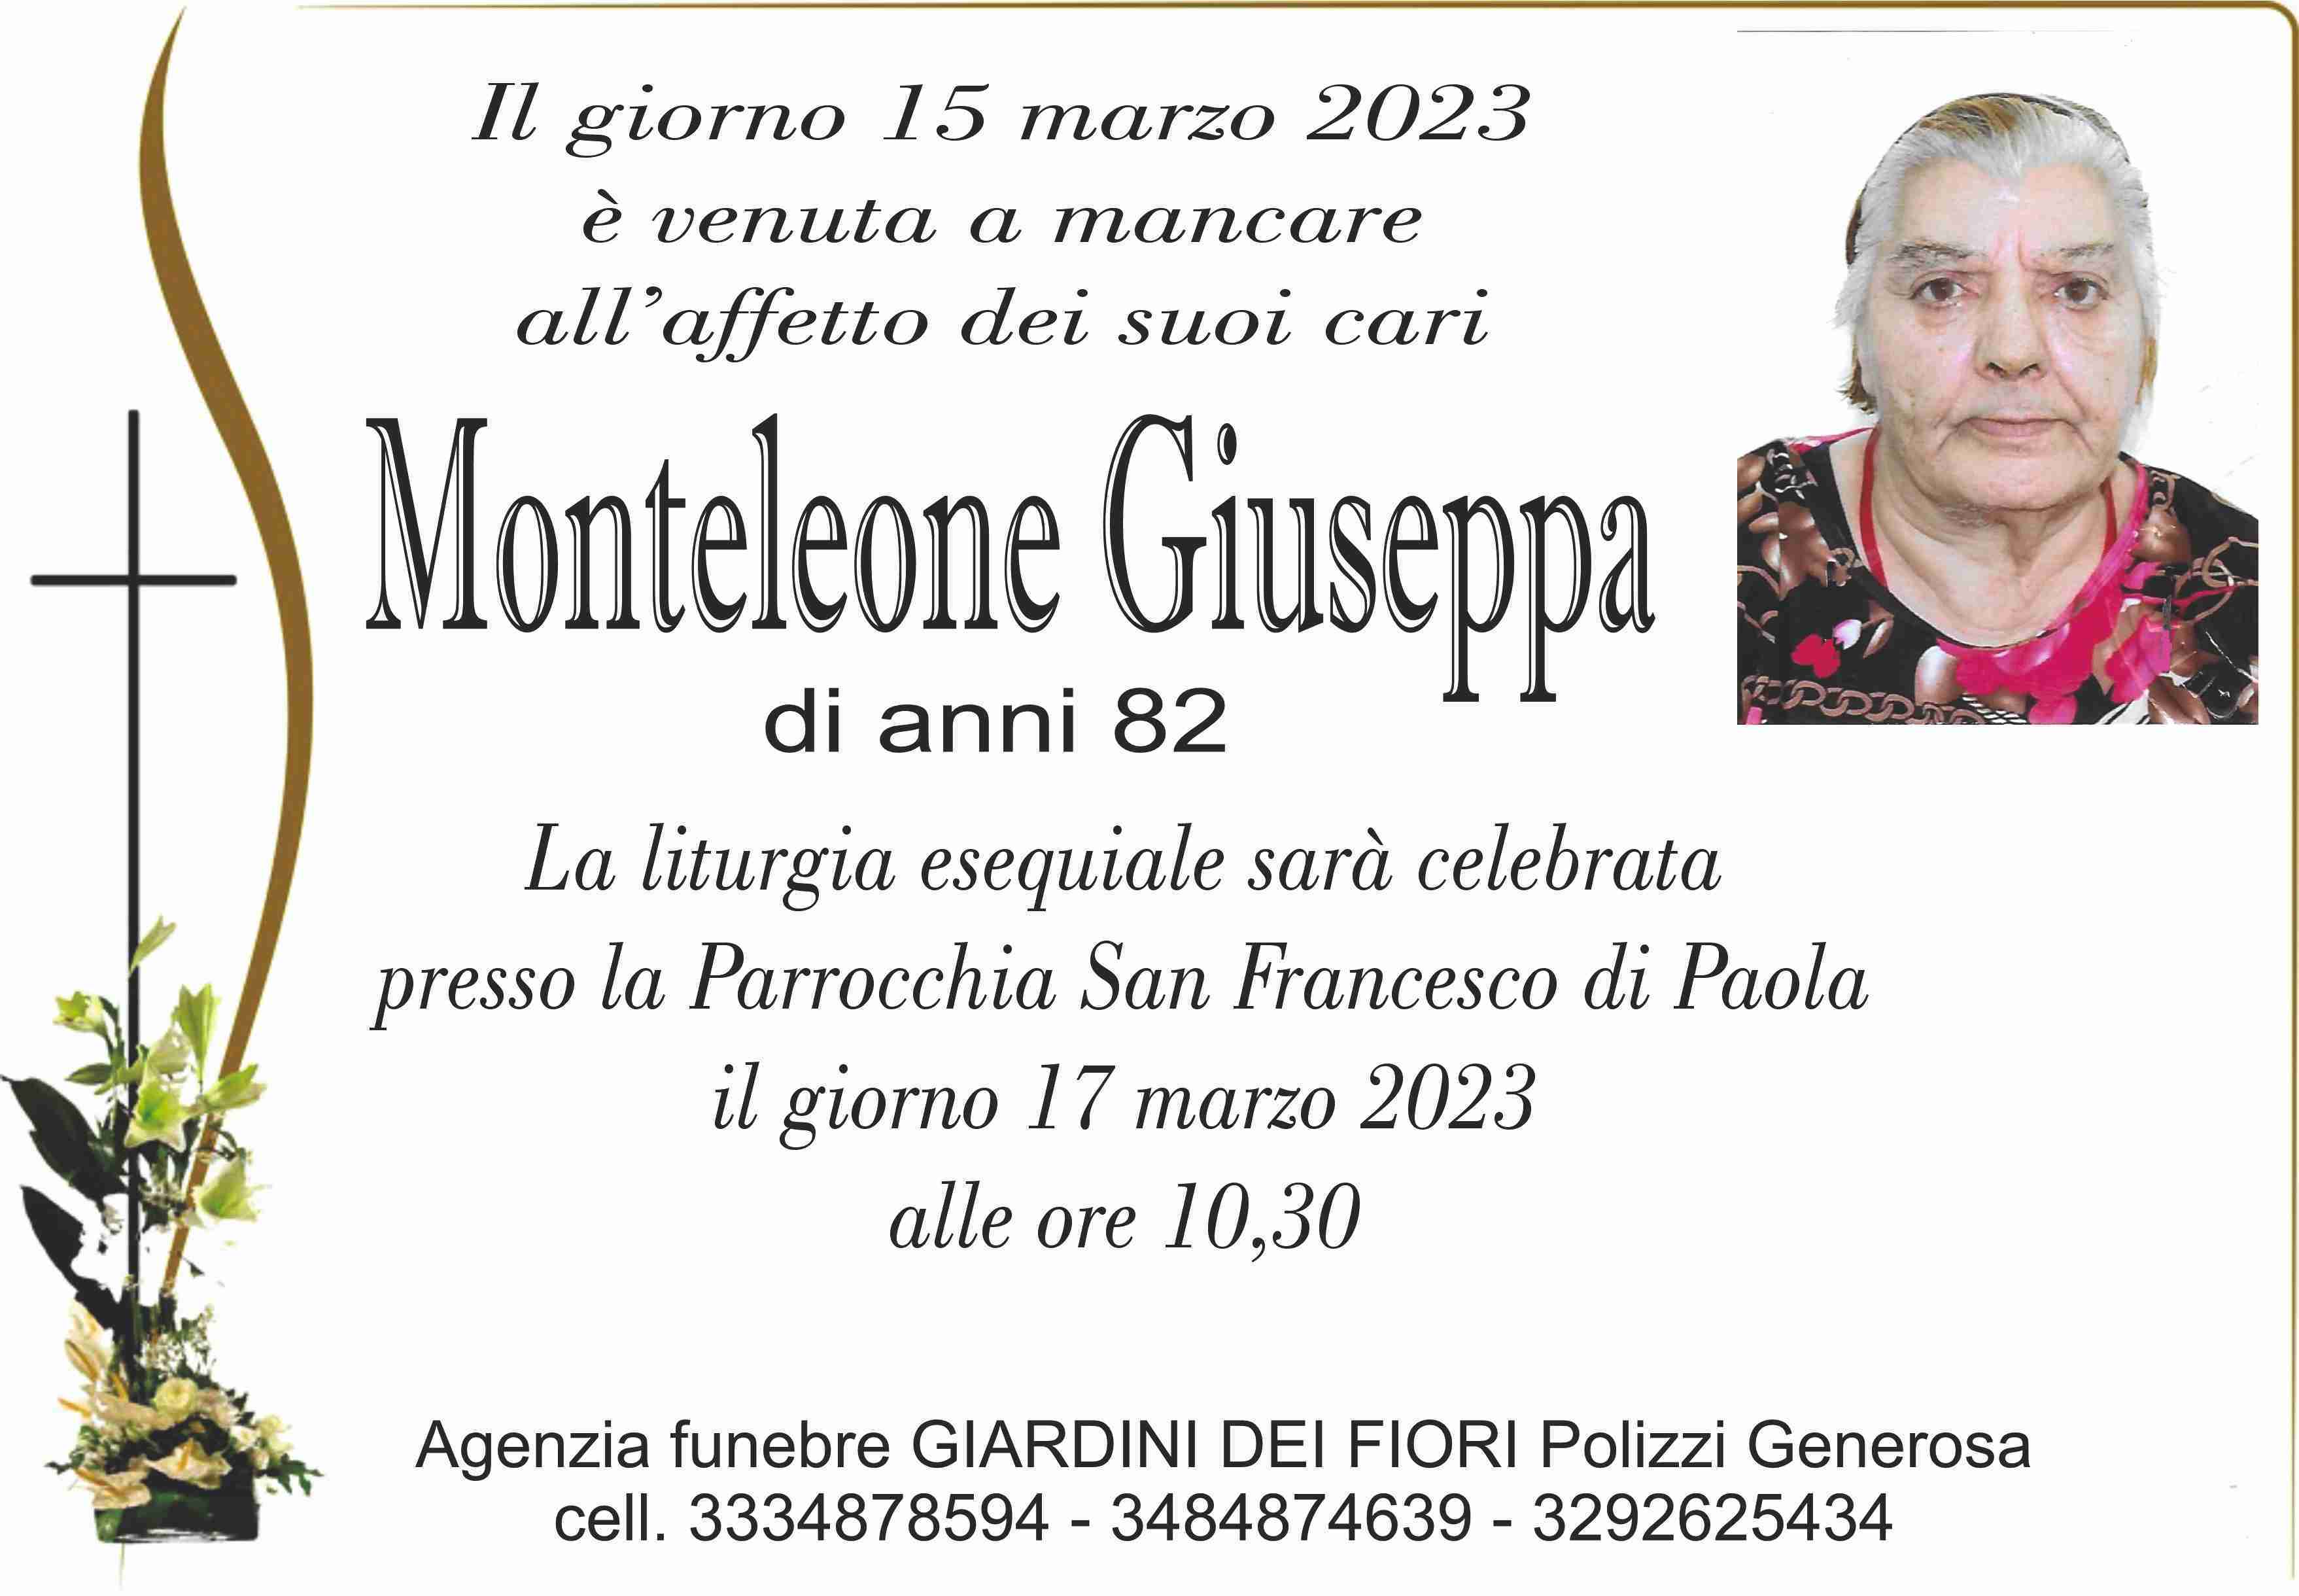 Giuseppa Monteleone